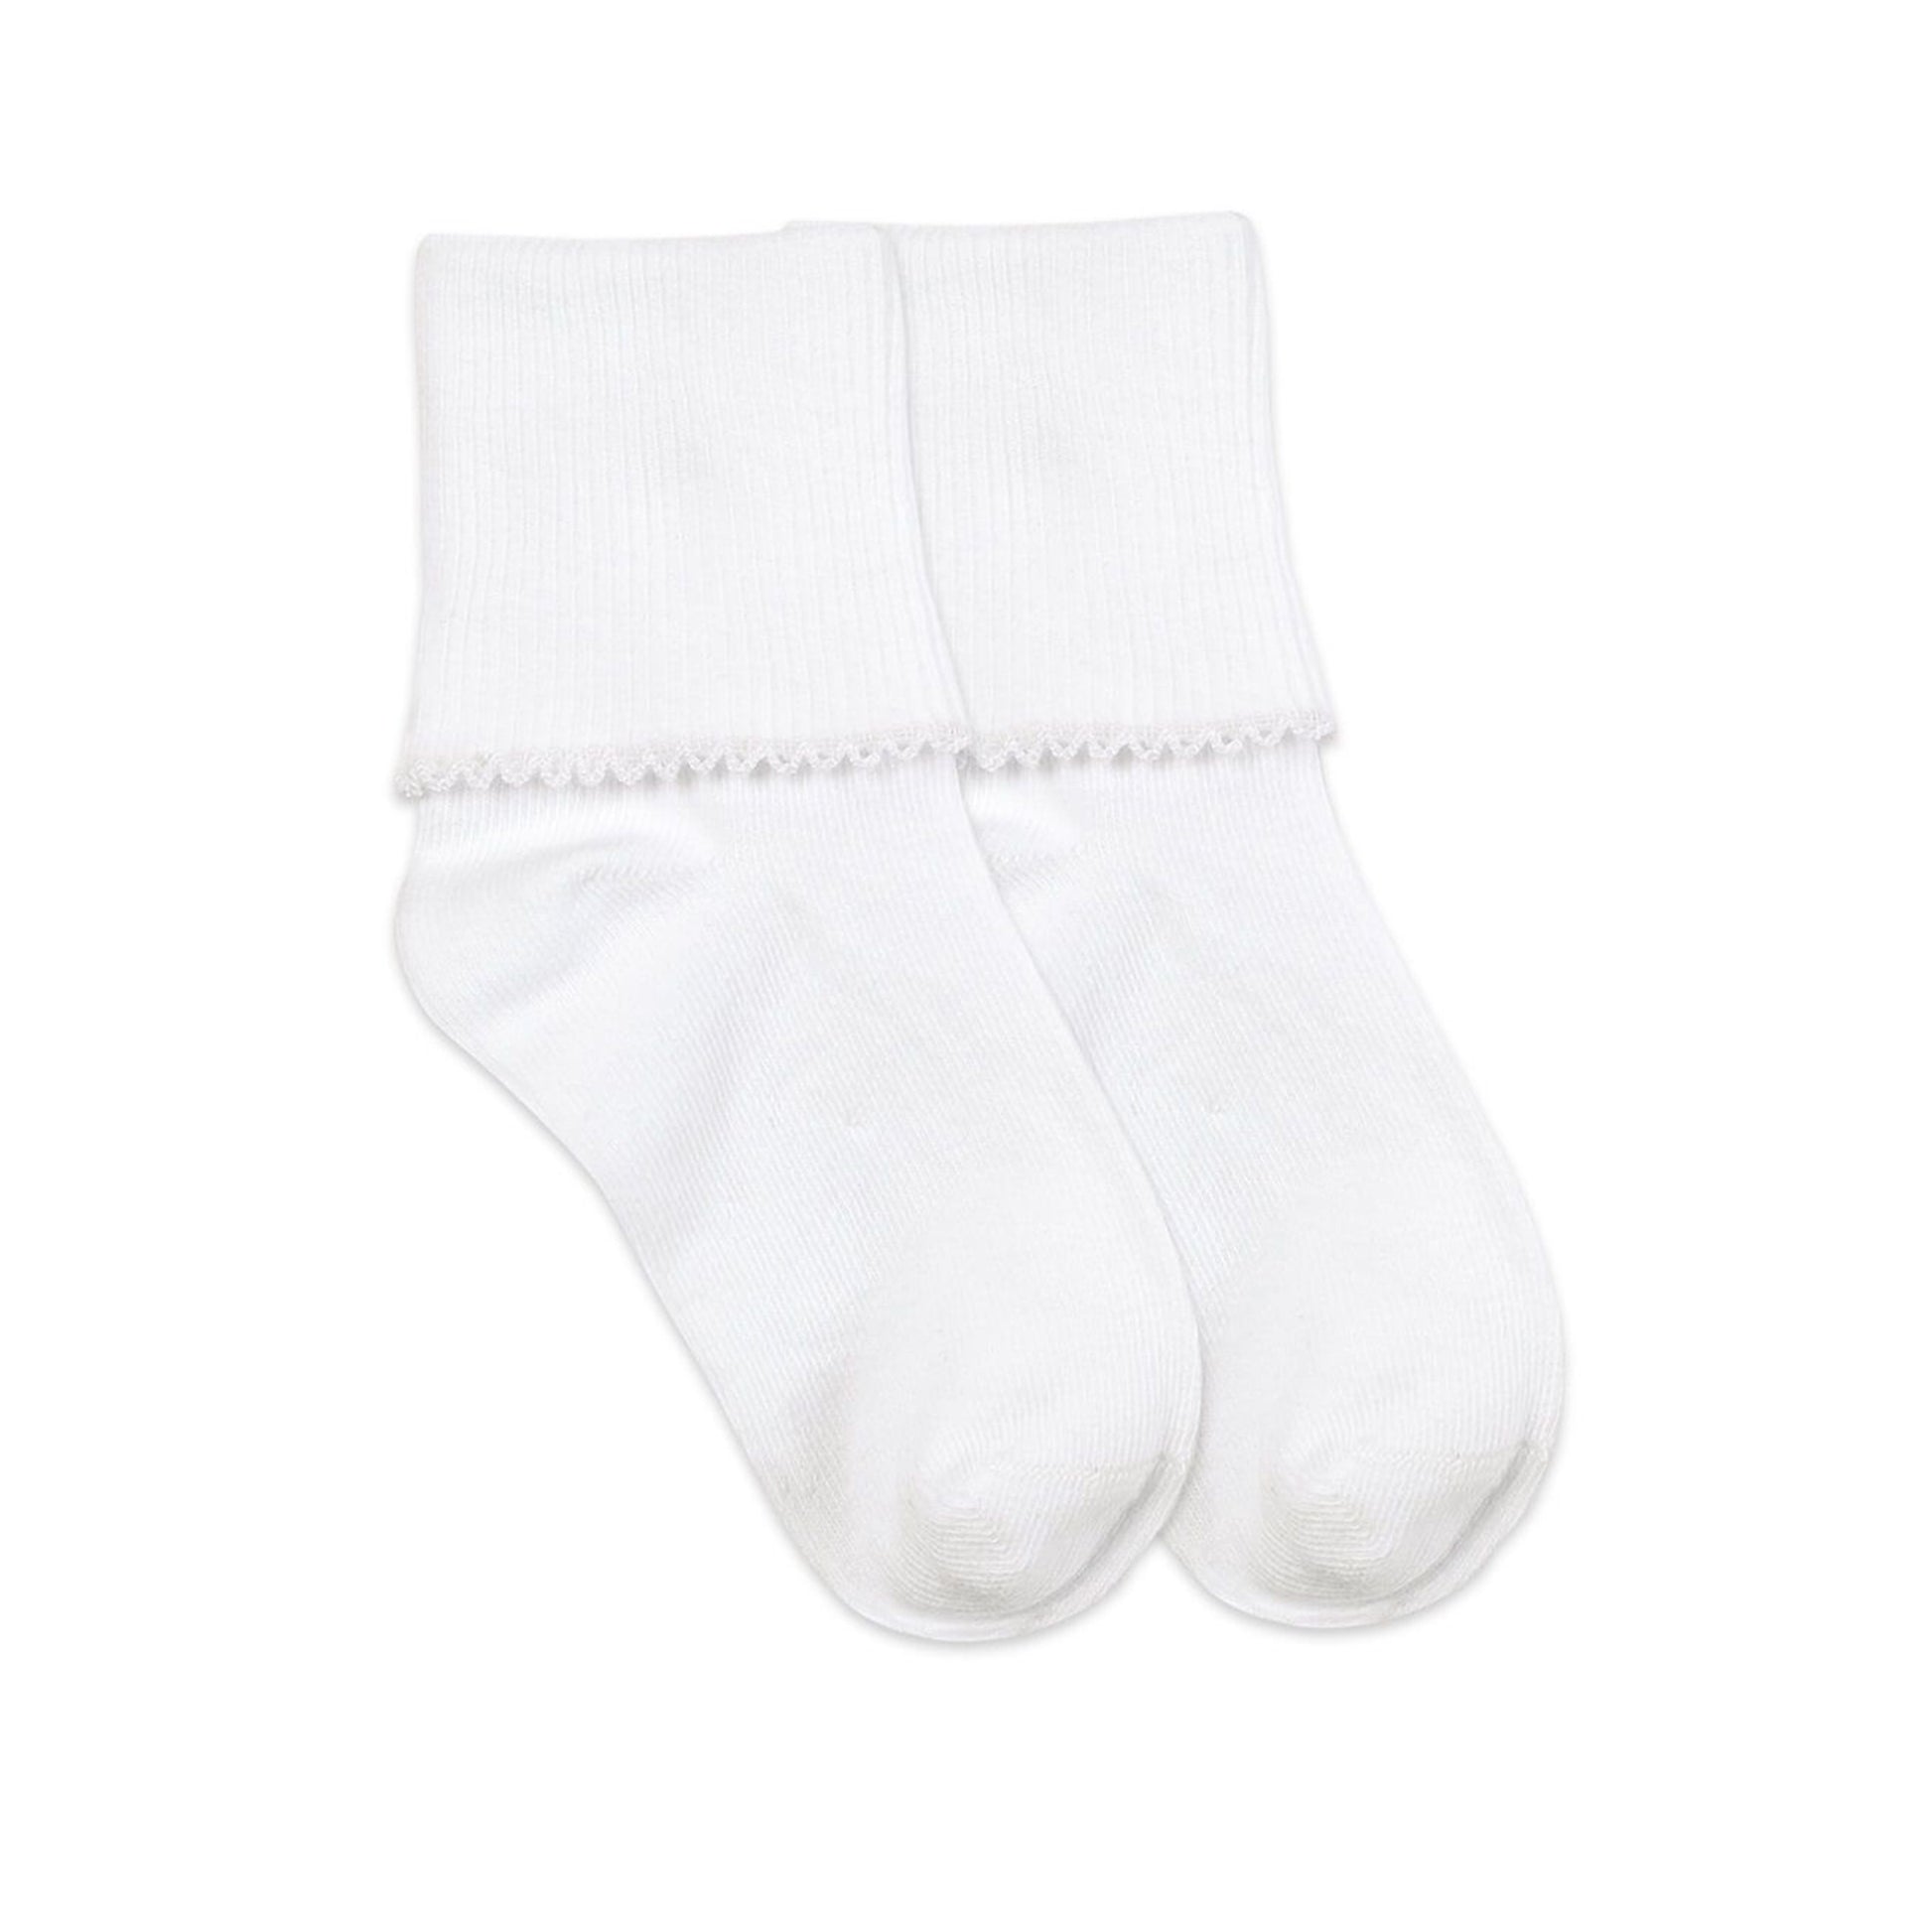 Jefferies Socks Double Lace Nylon Turn Cuff Socks 1 Pair